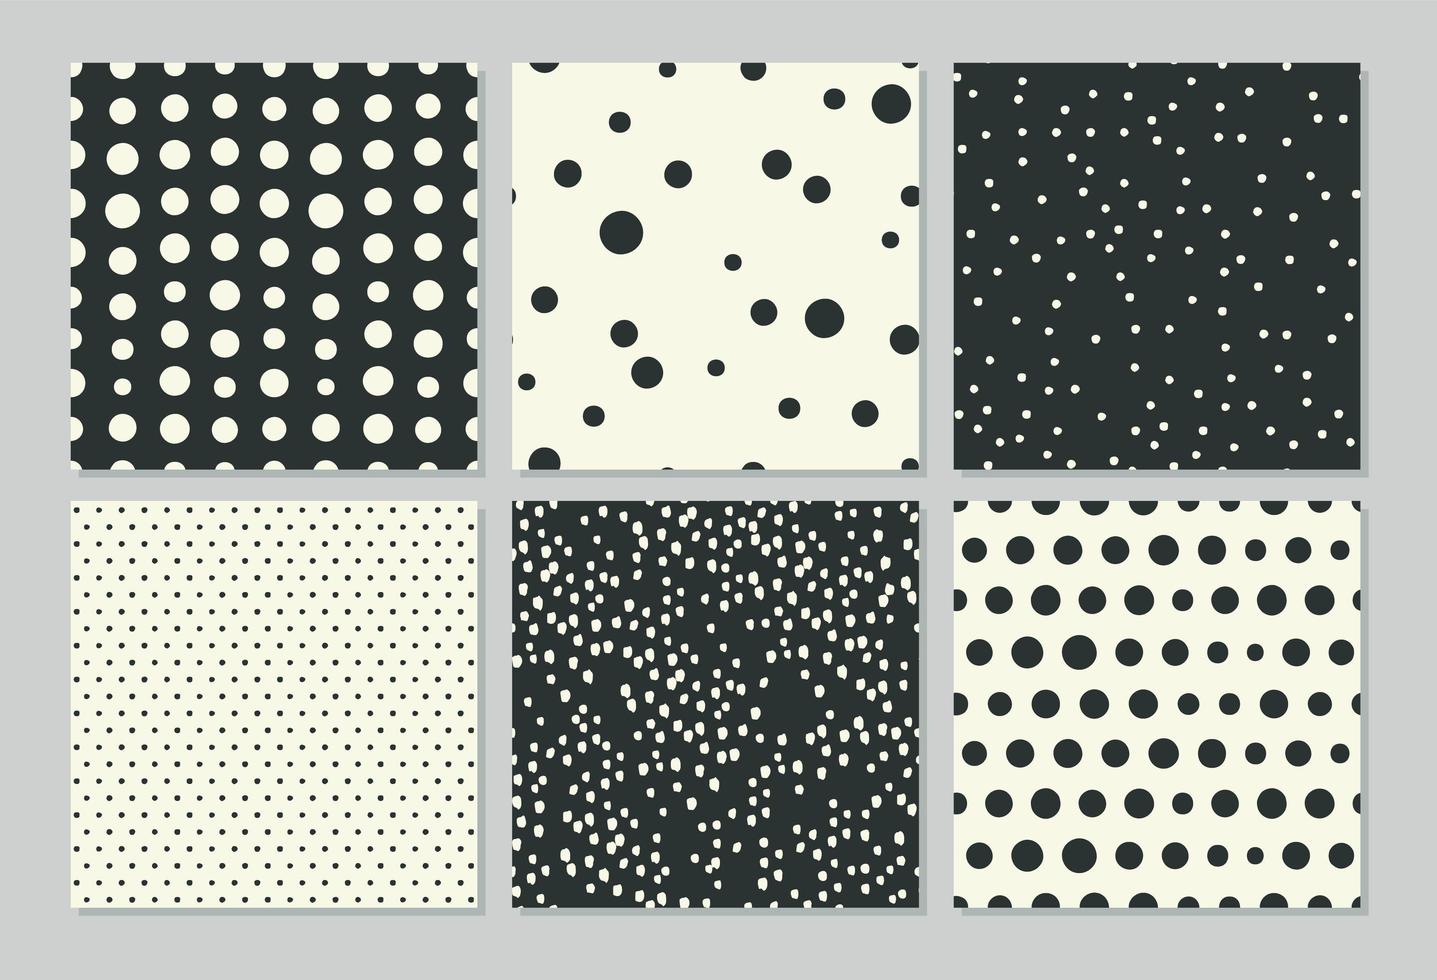 Abstract seamless patterns with drawing polka dots vector